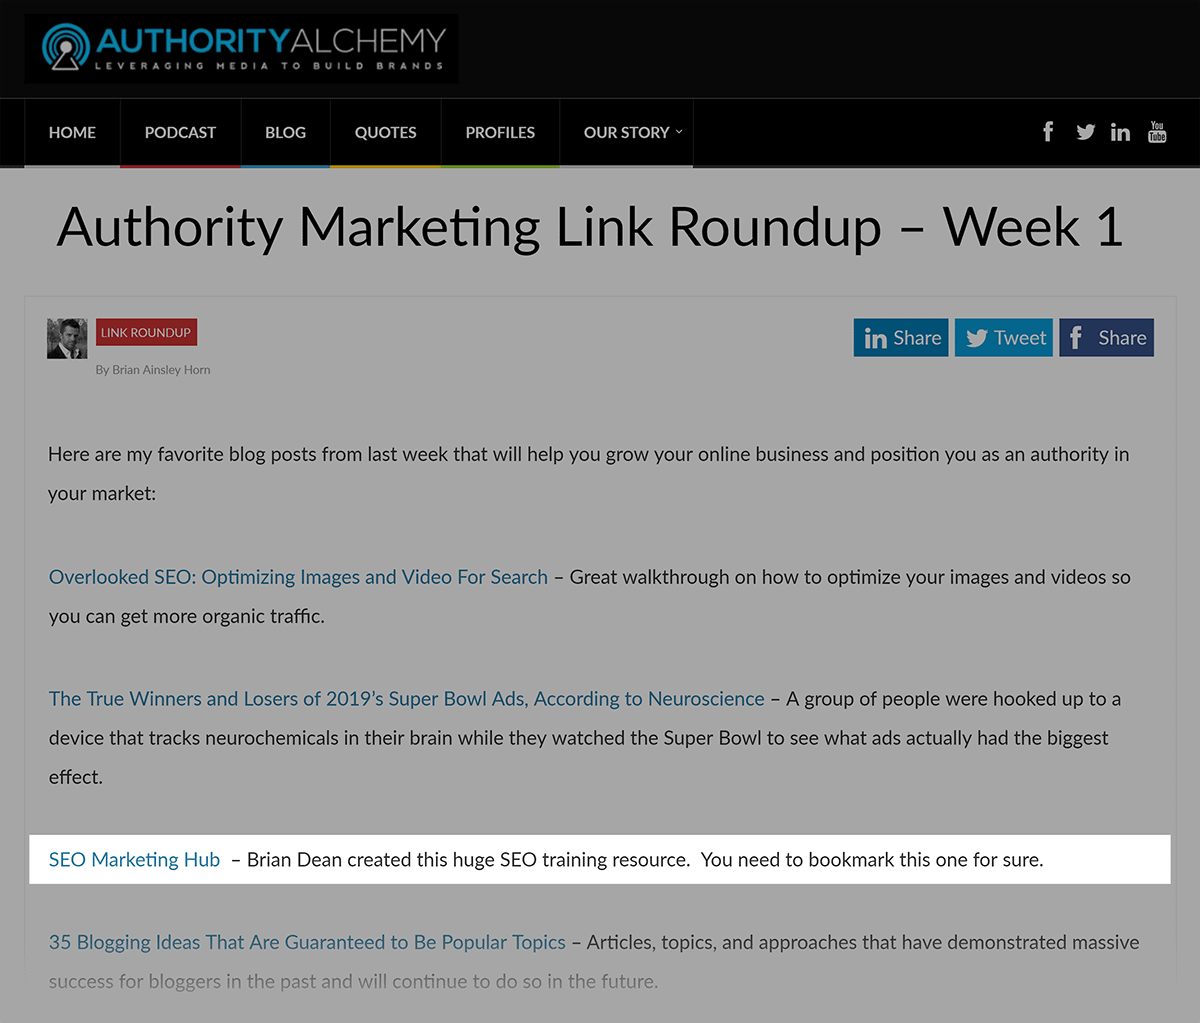 SEO Marketing Hub - Backlink from AuthorityAlchemy's link roundup